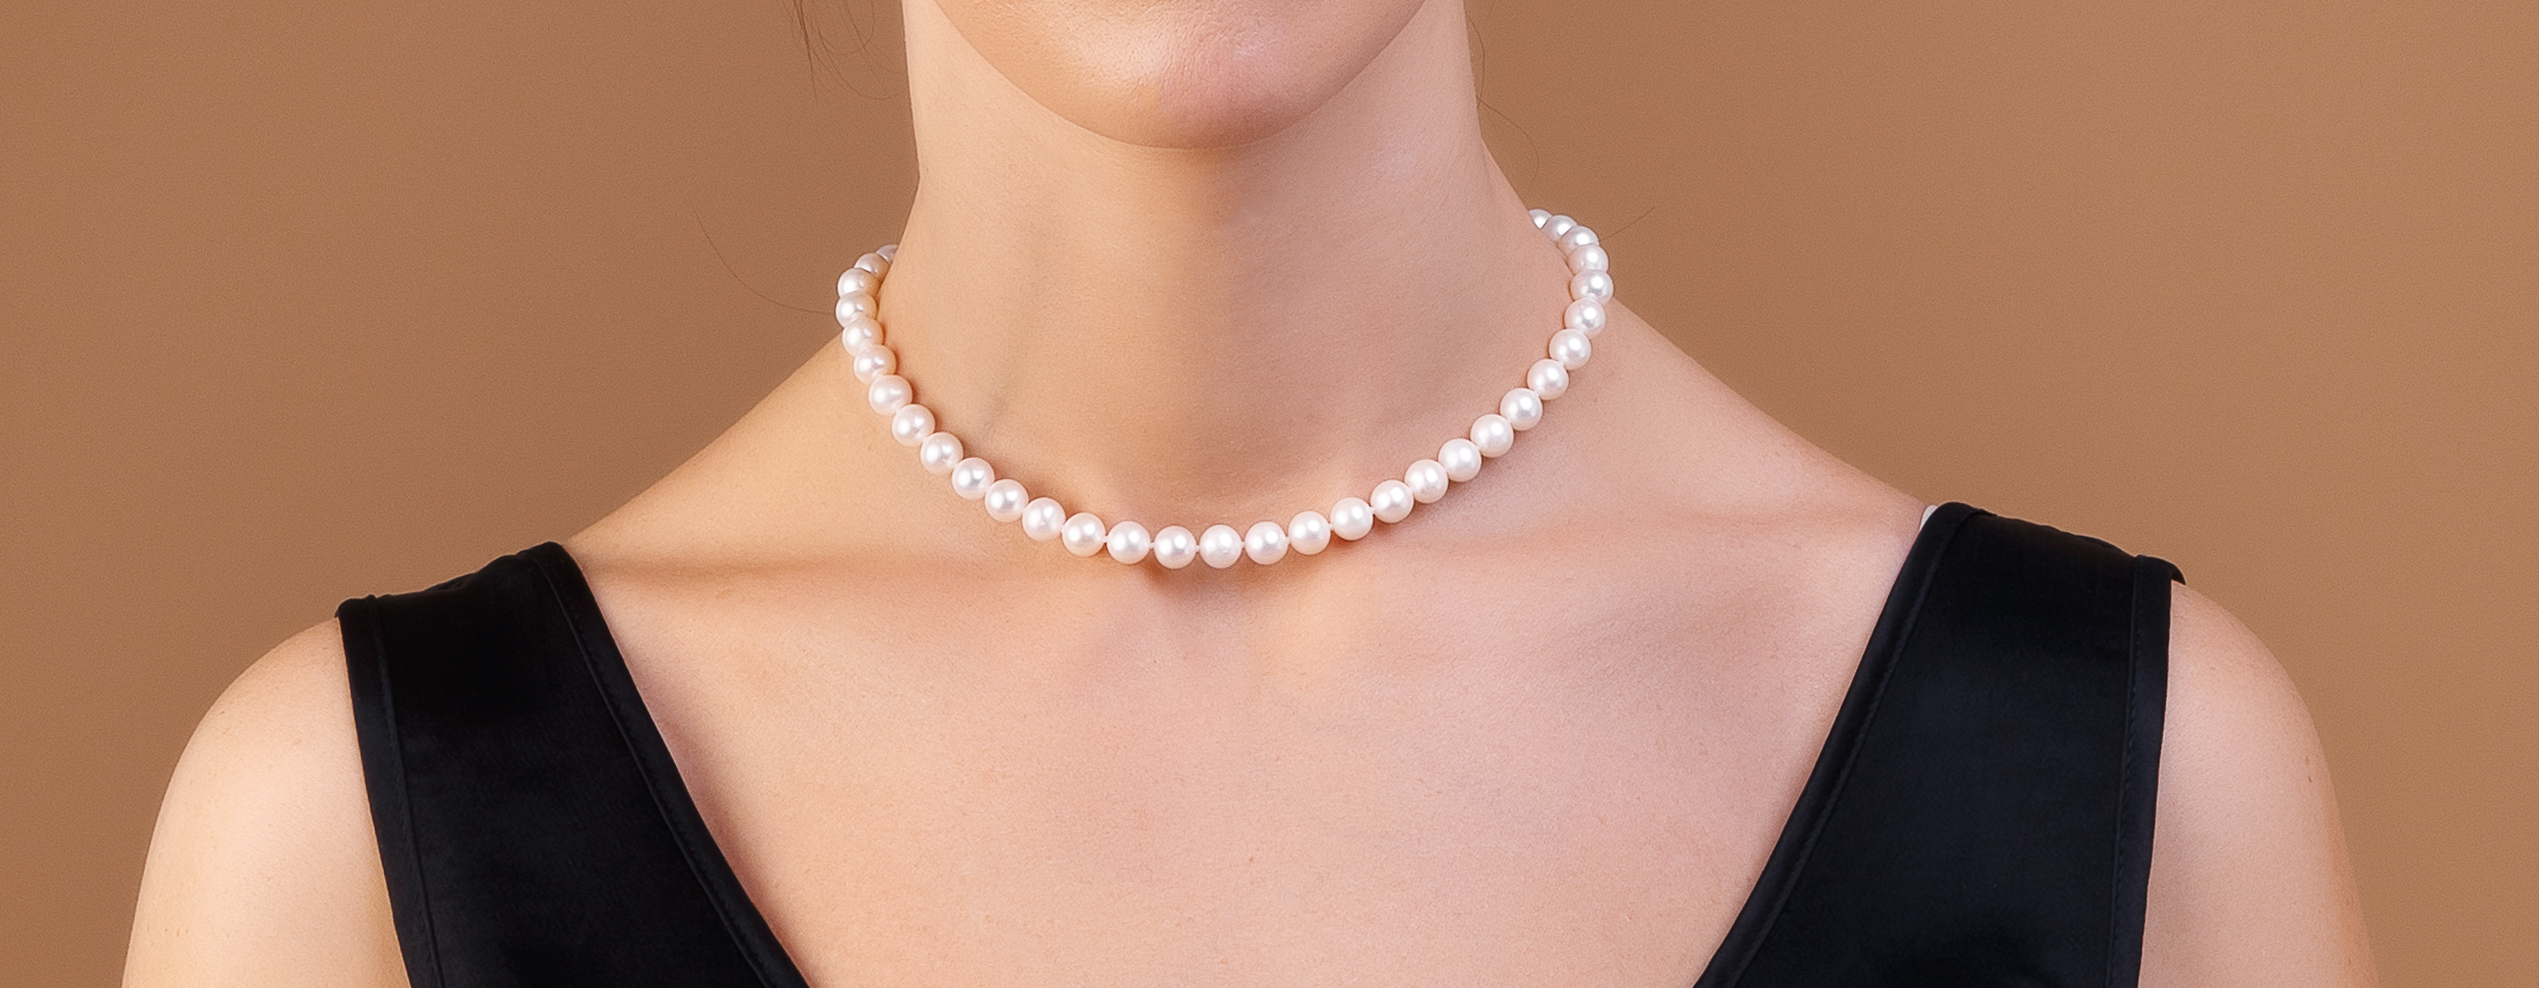 Wild Pearl Necklace by Nava Zahavi